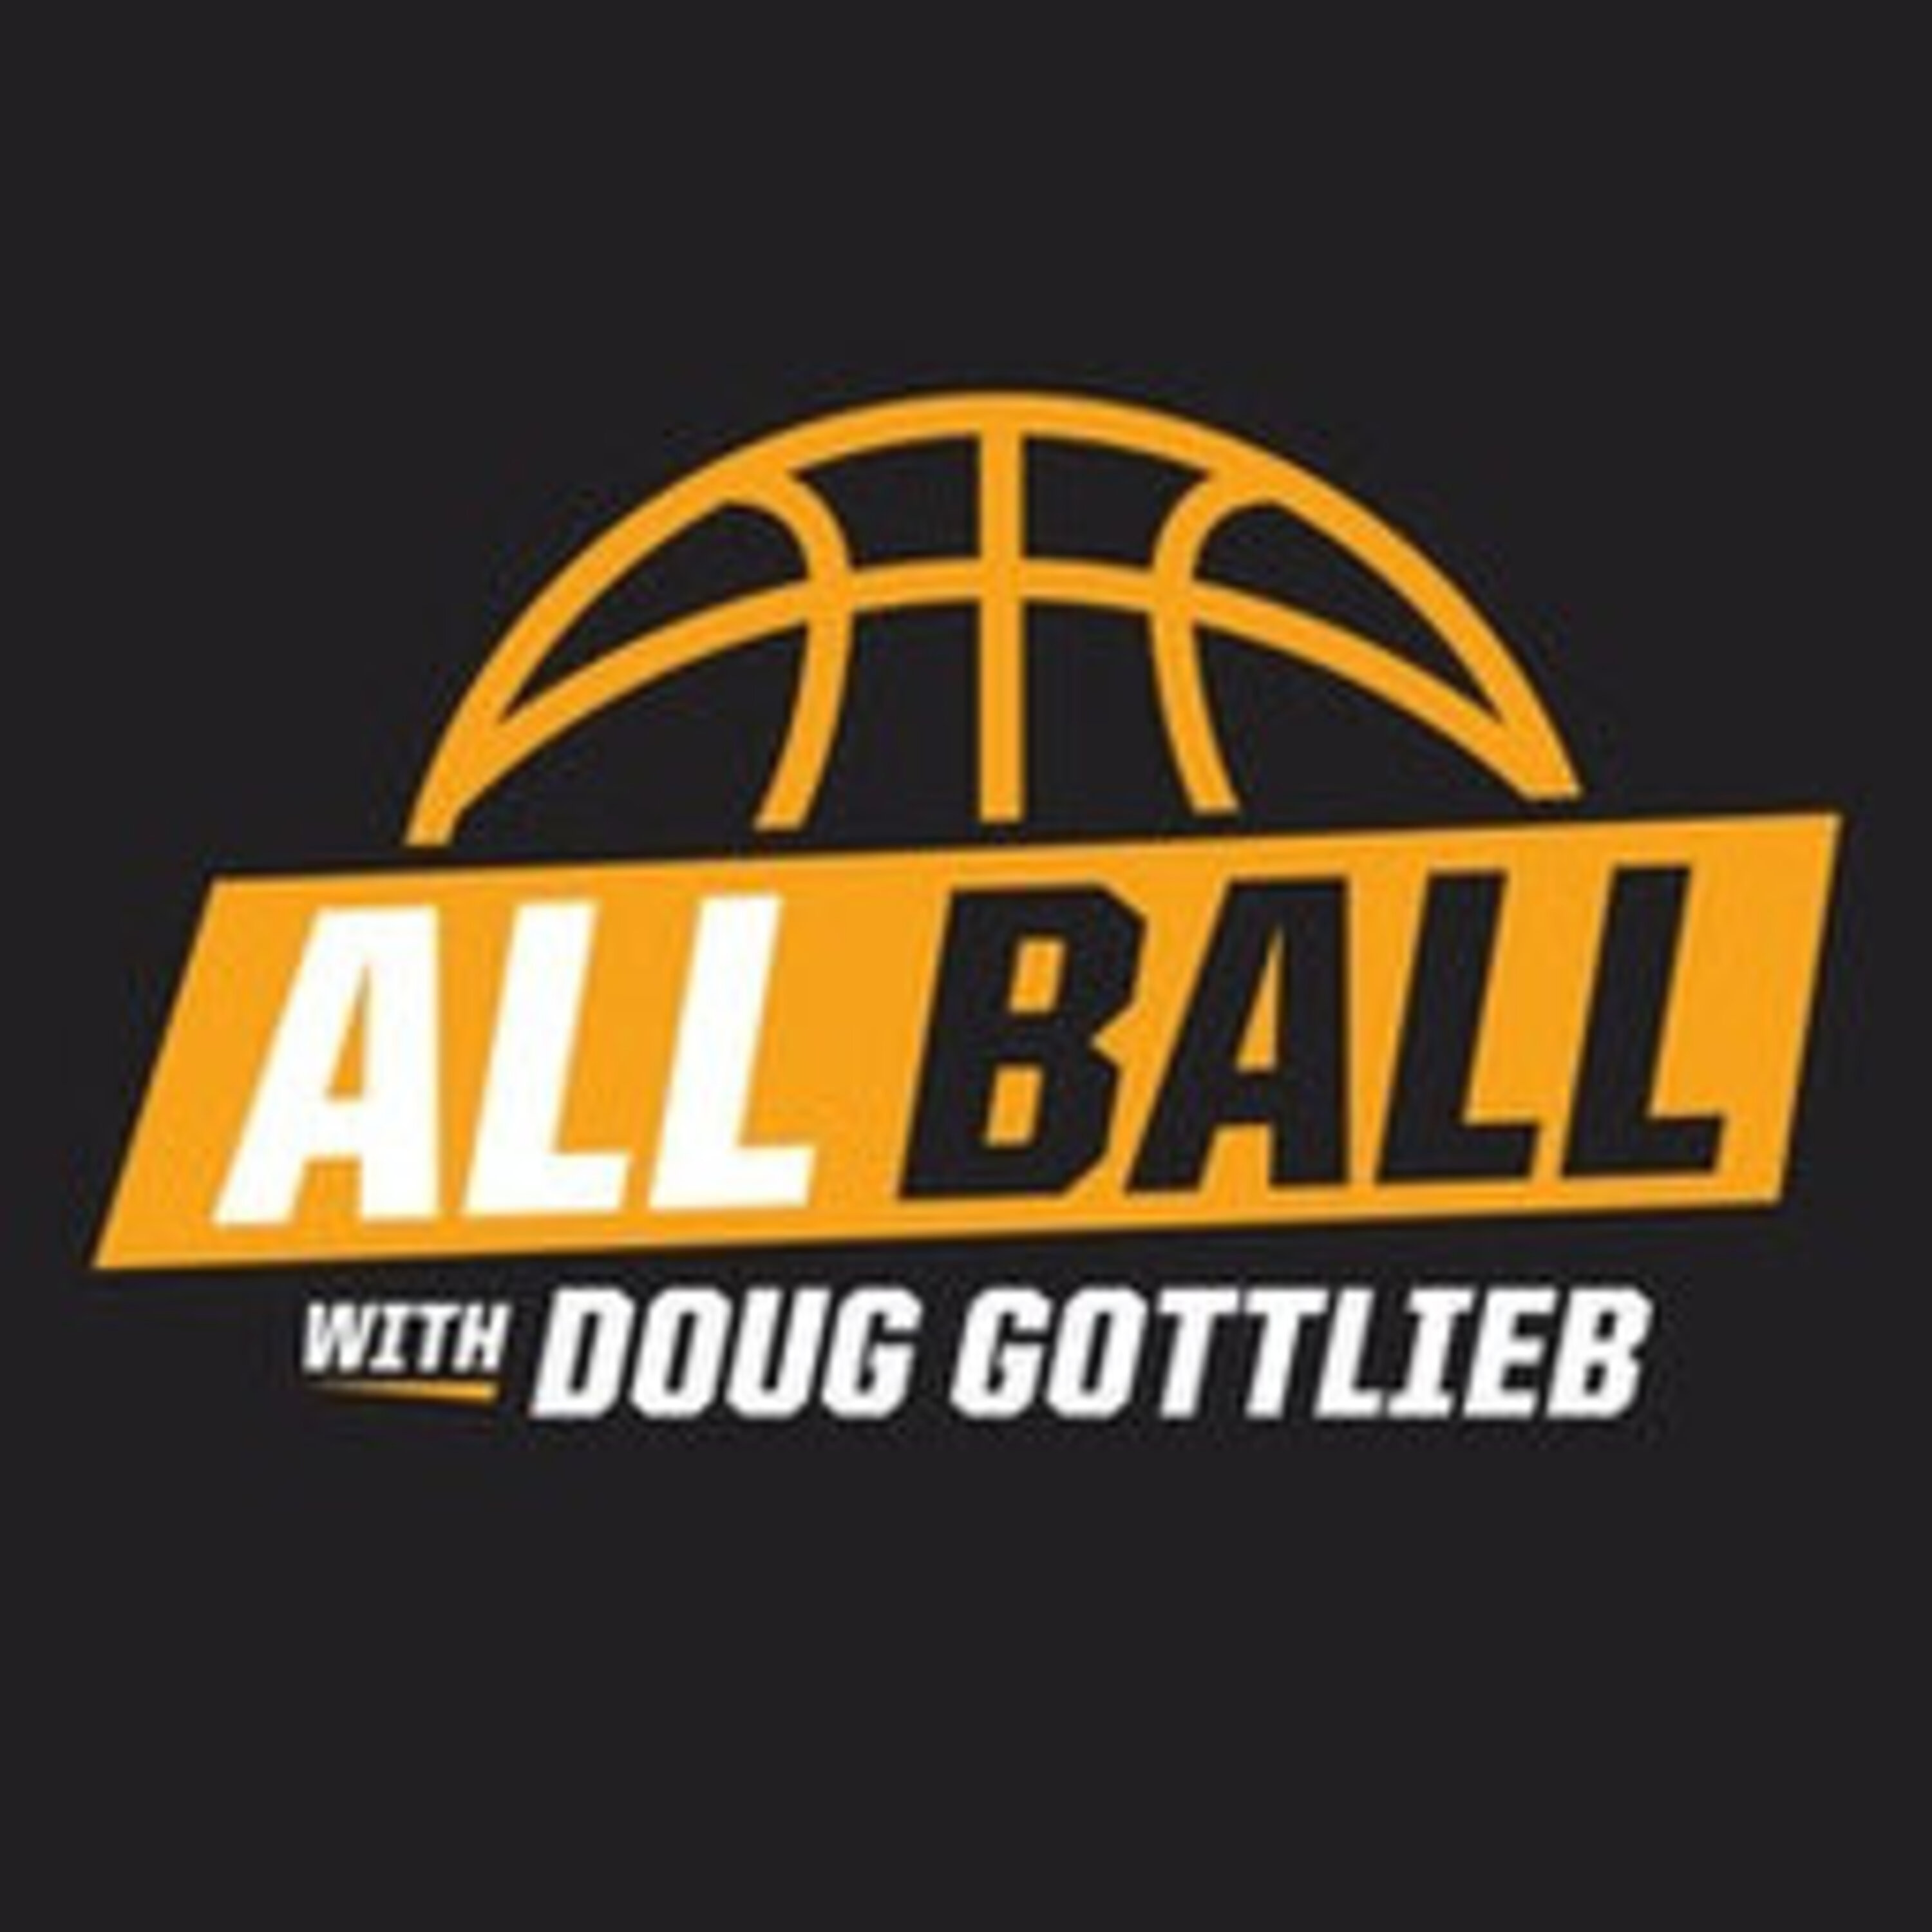 All Ball - Jeff Goodman on Dusty May/Ohio State Fit, Coaching Hiring/Firings